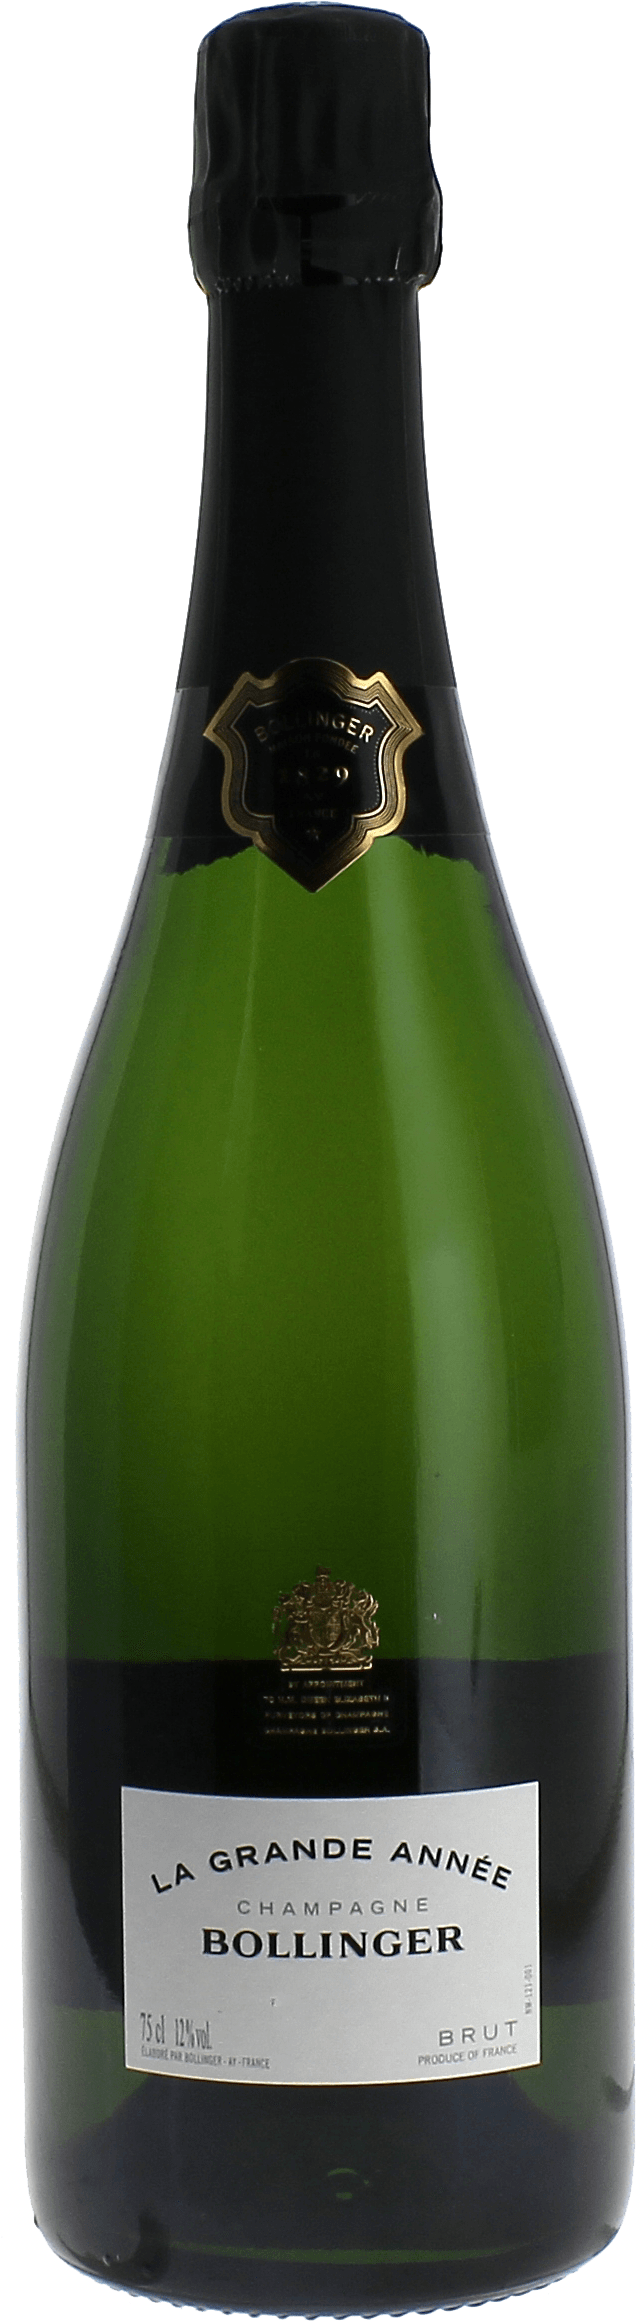 Bollinger grande anne avec coffret 2012  Bollinger, Champagne